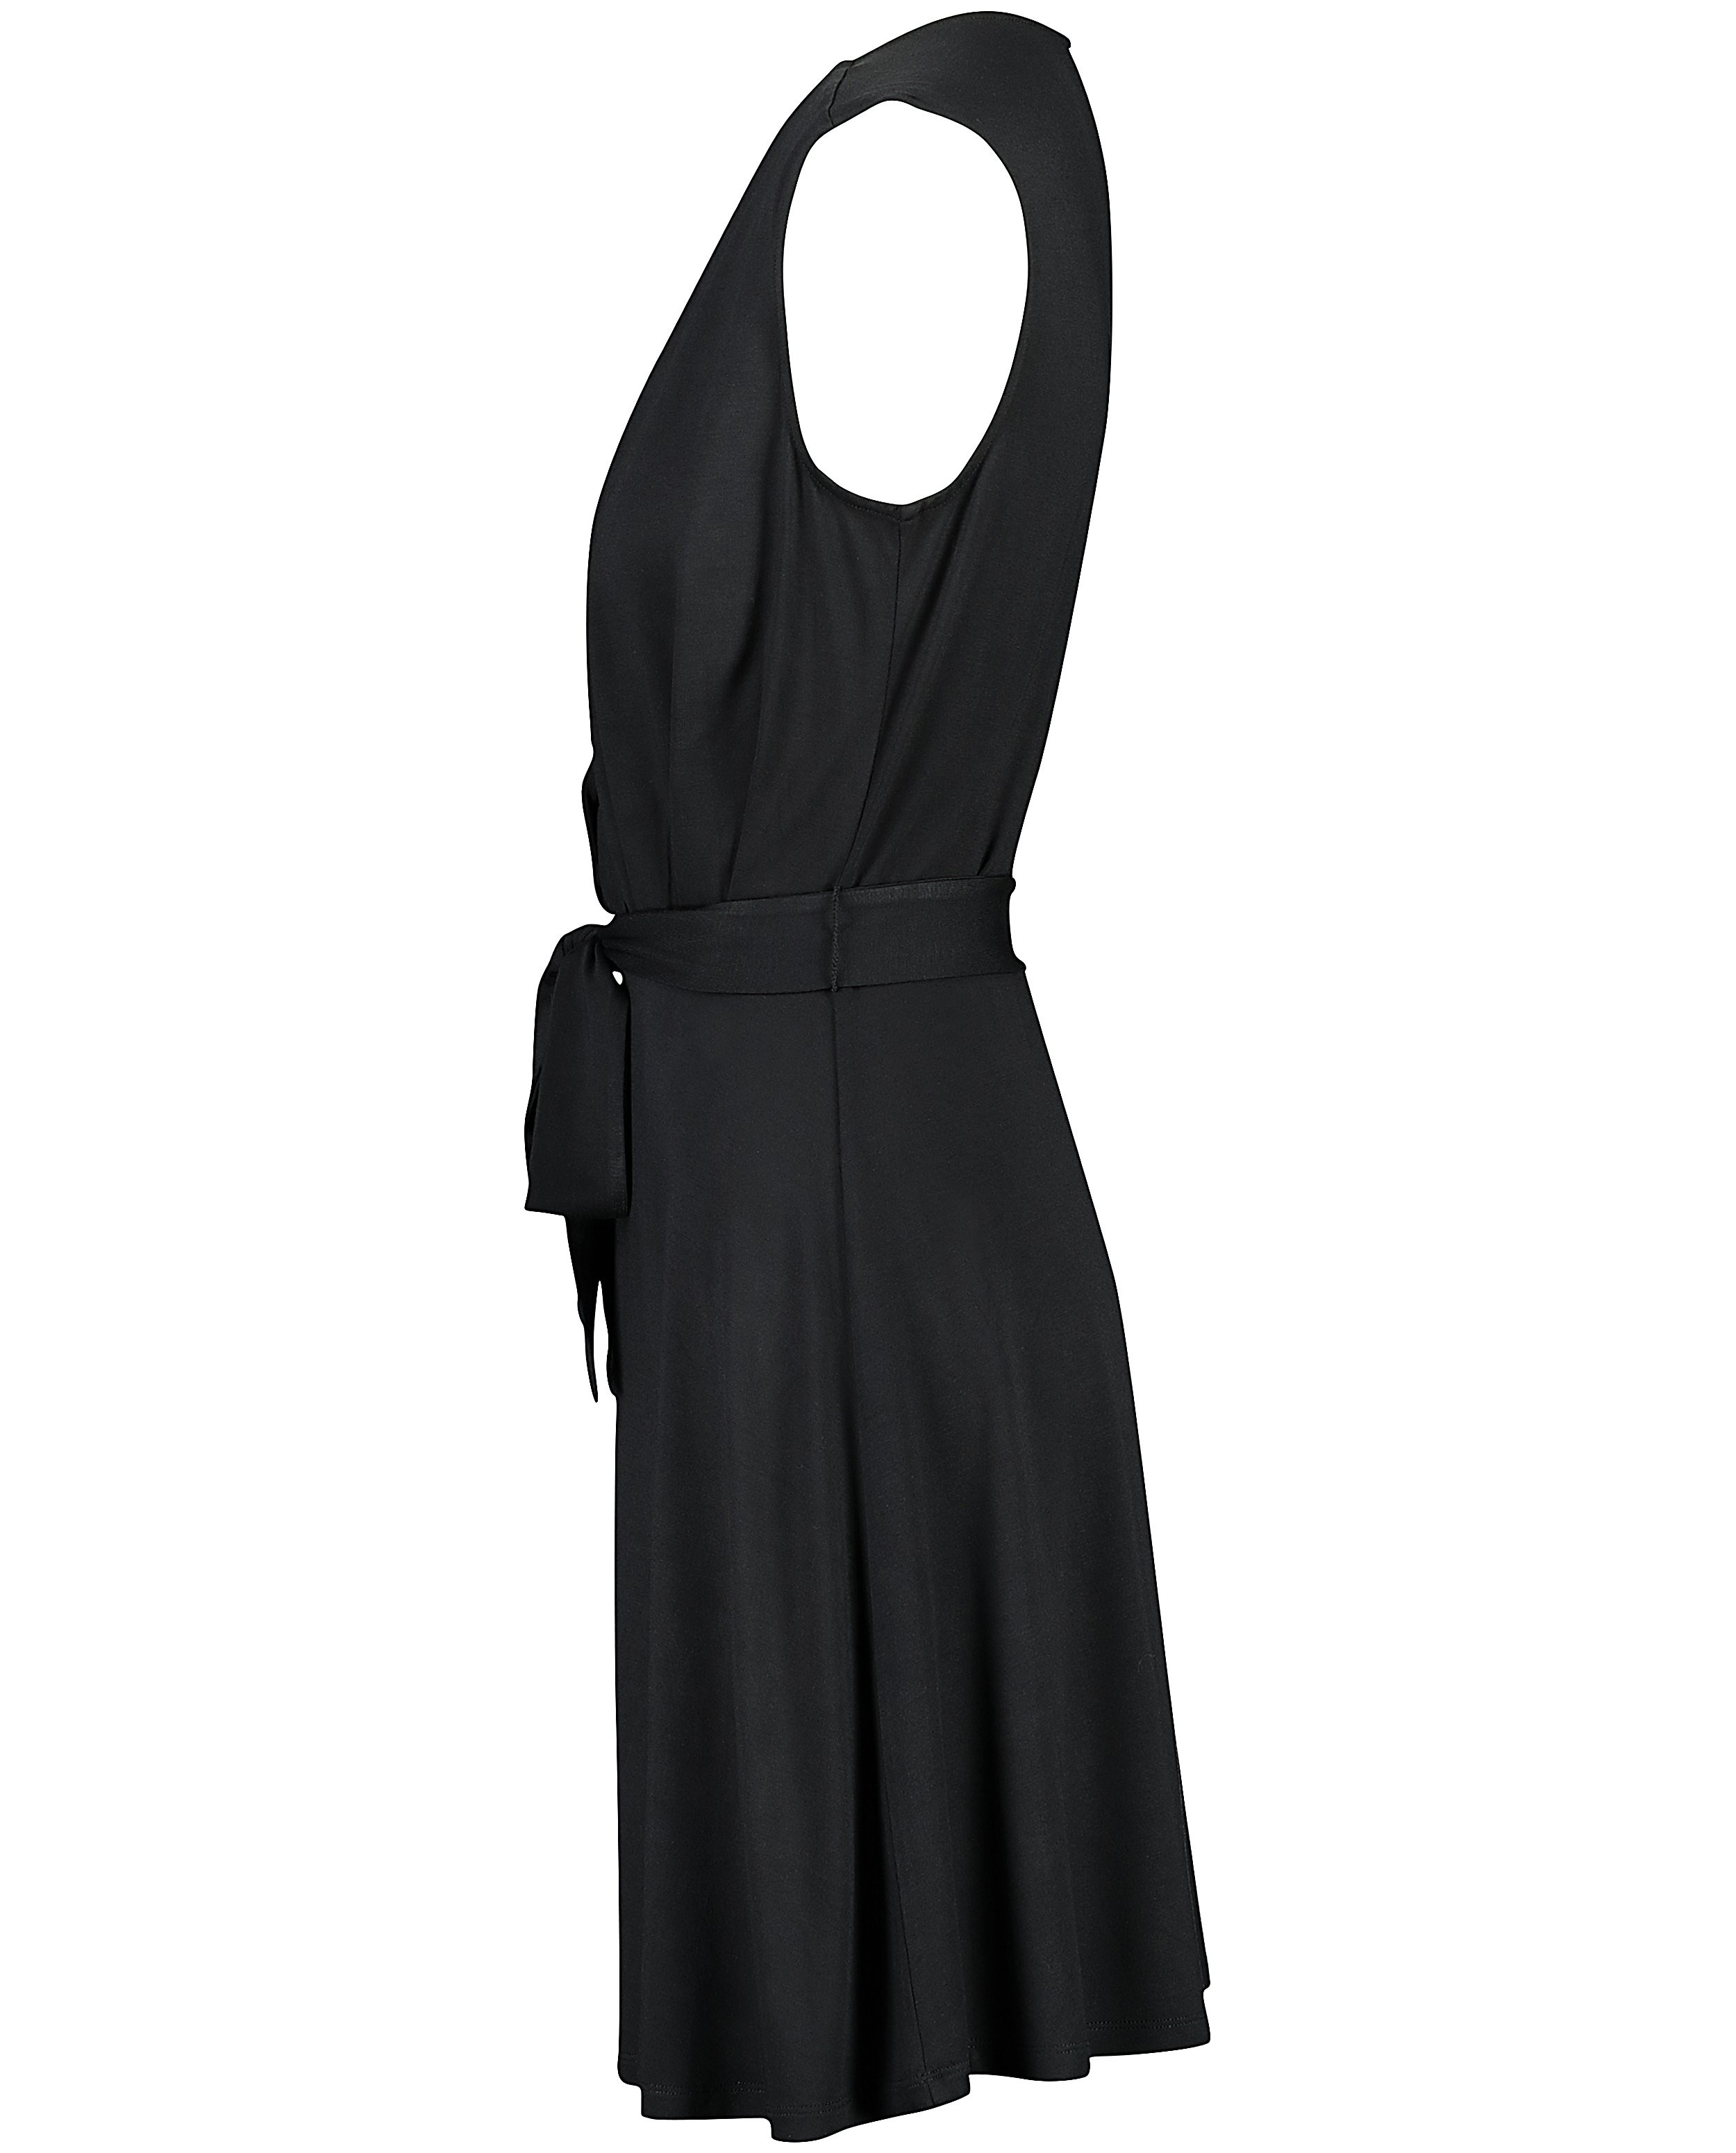 Kleedjes - Zwarte jurk met knooplint